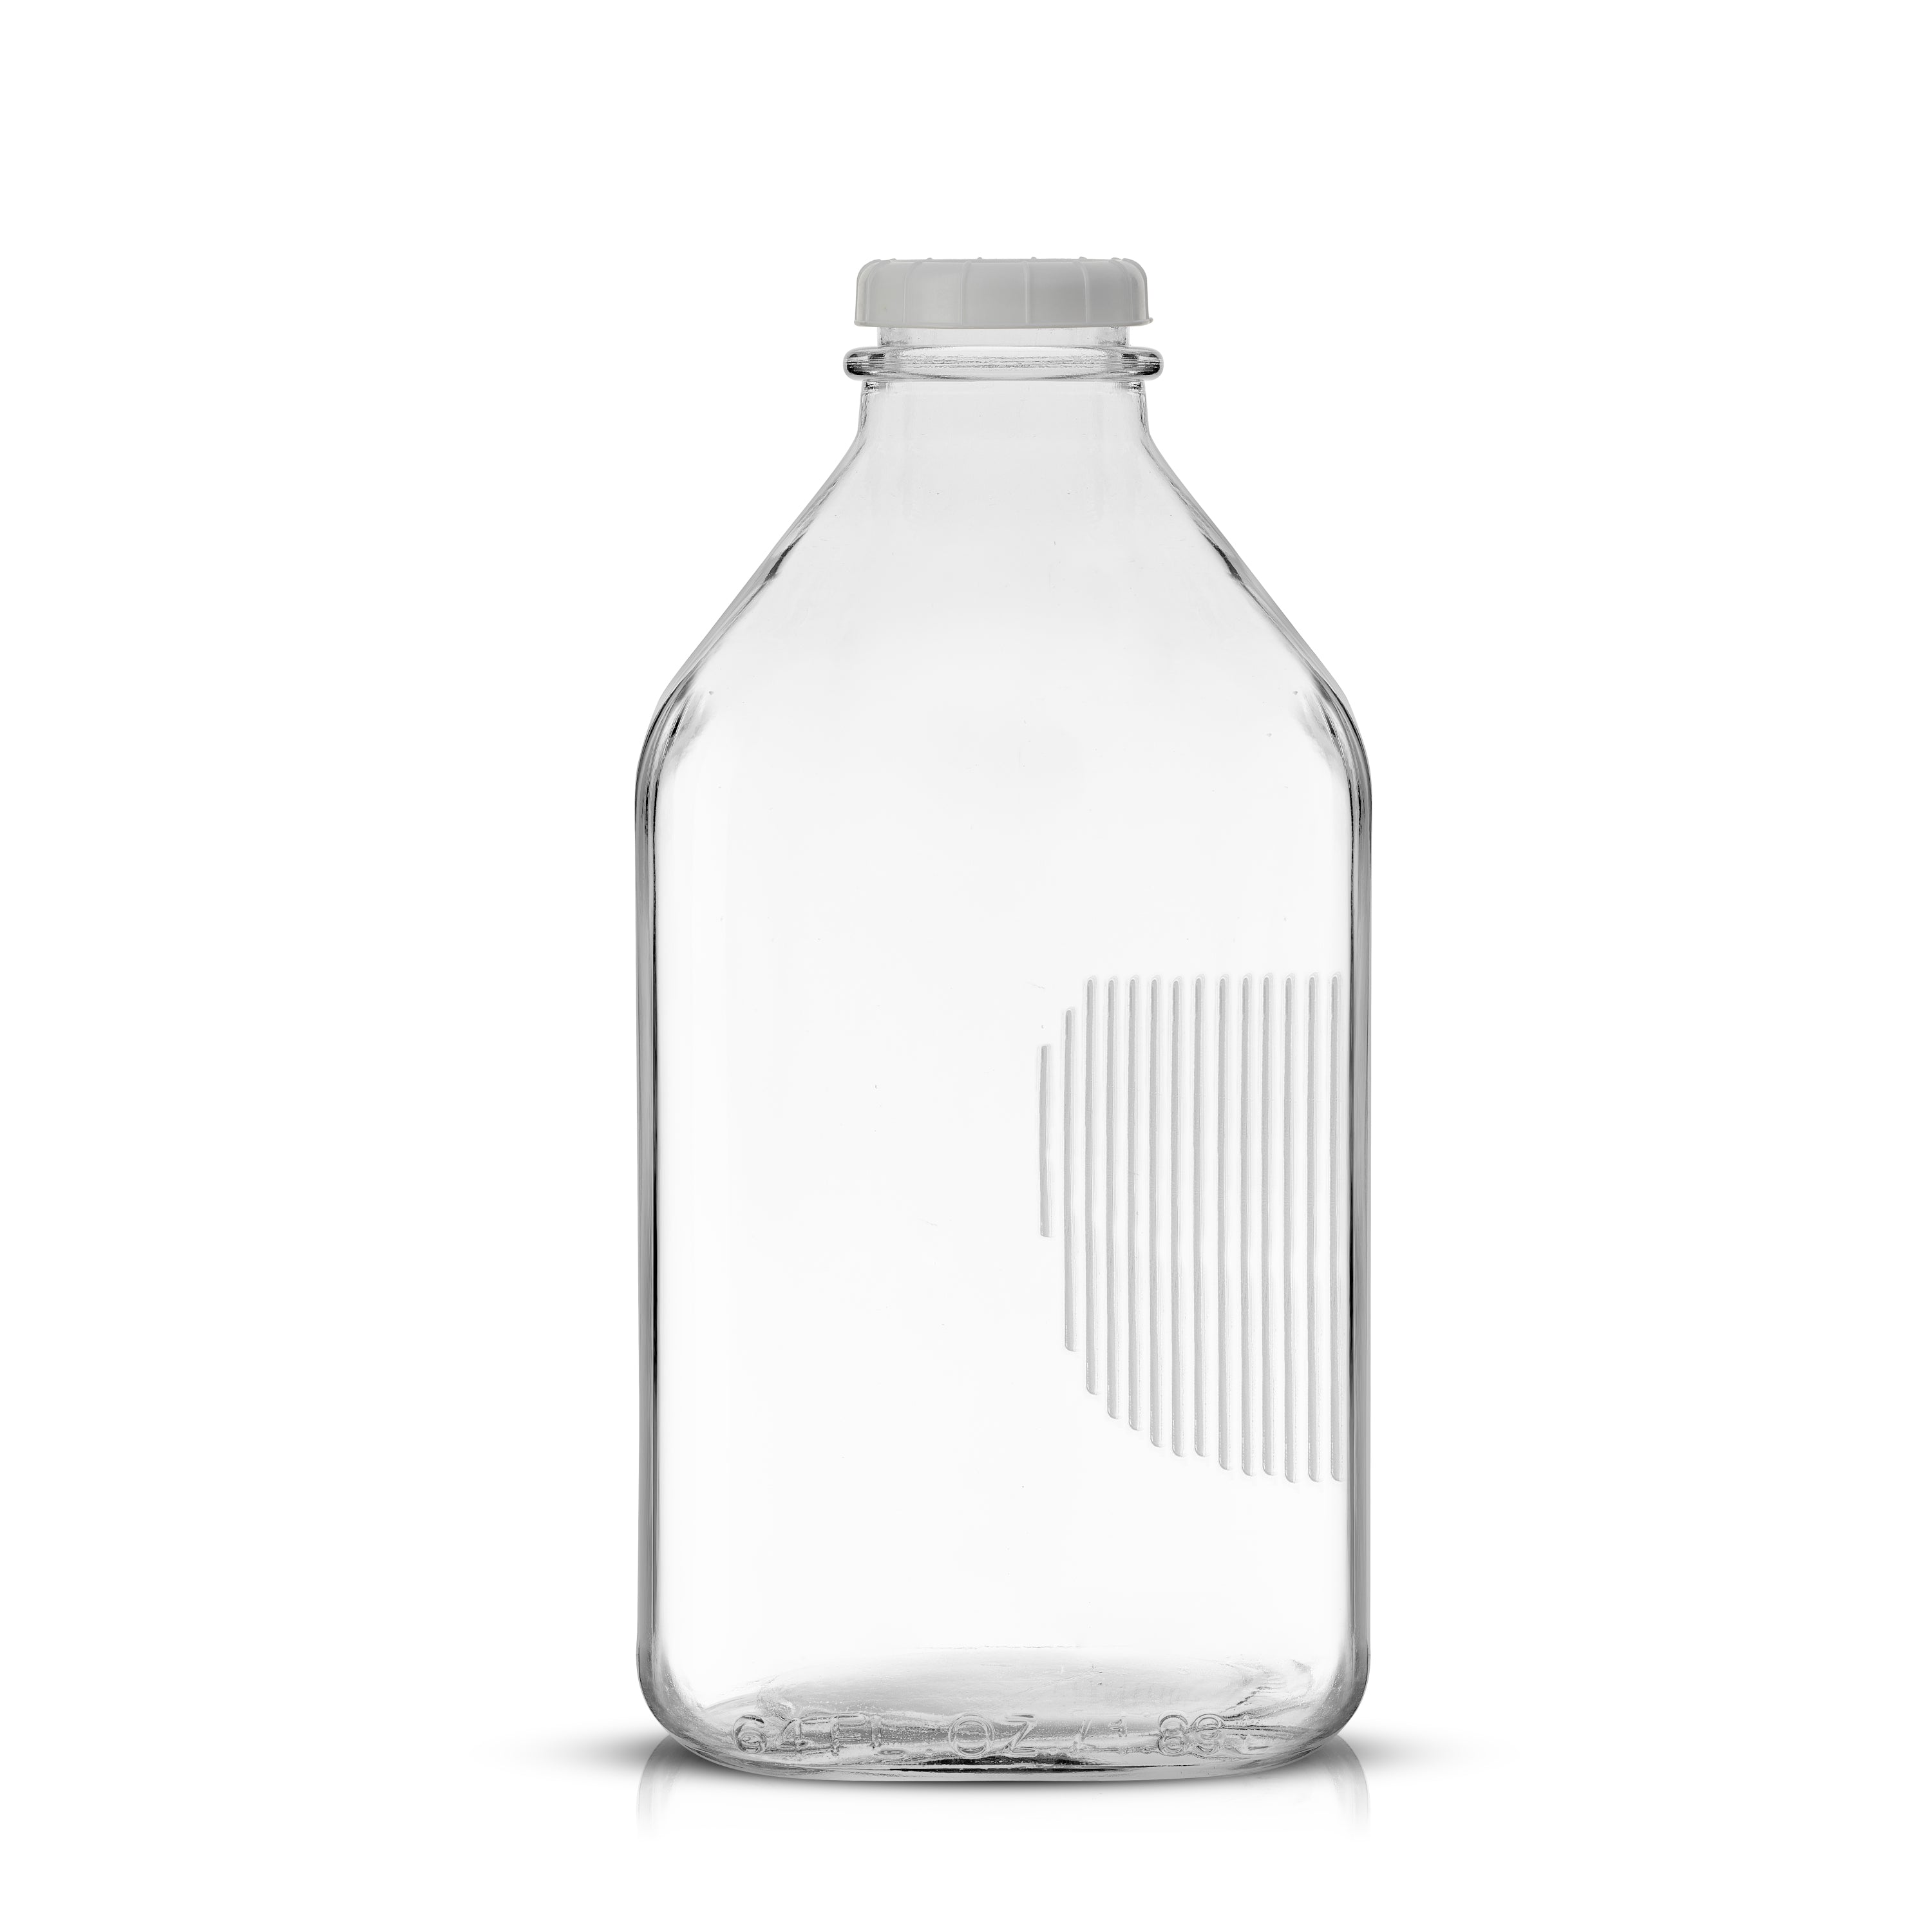 JoyJolt Reusable Glass Milk Bottle with Lid & Pourer - Set of 3